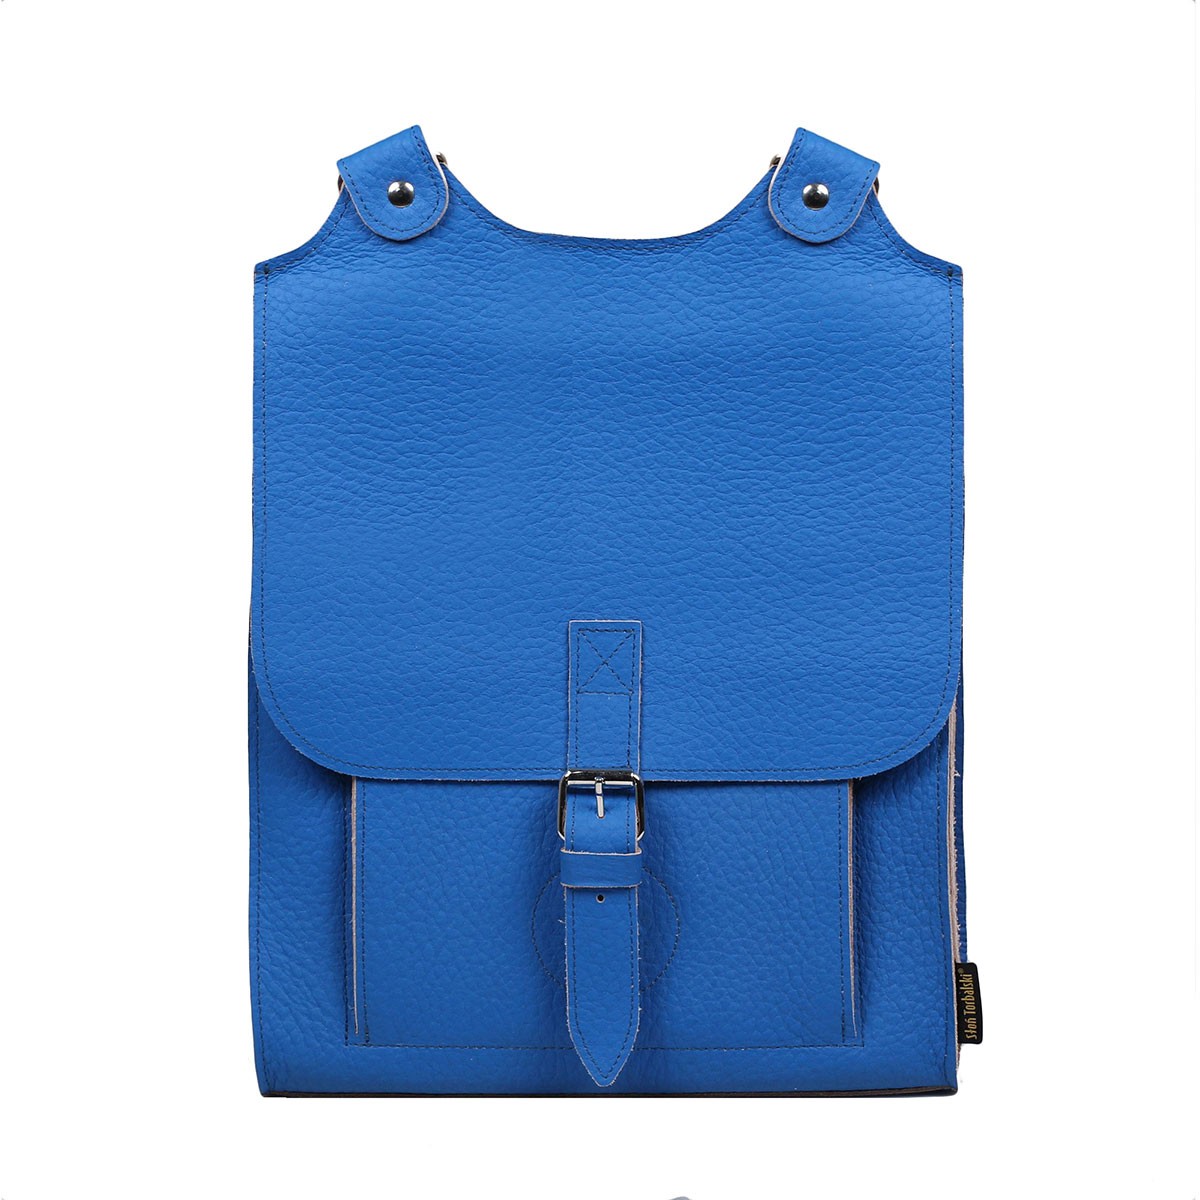 niebieski-plecak-skorzany-vintage-Boopack-00-09-0808-E12-87153.jpg